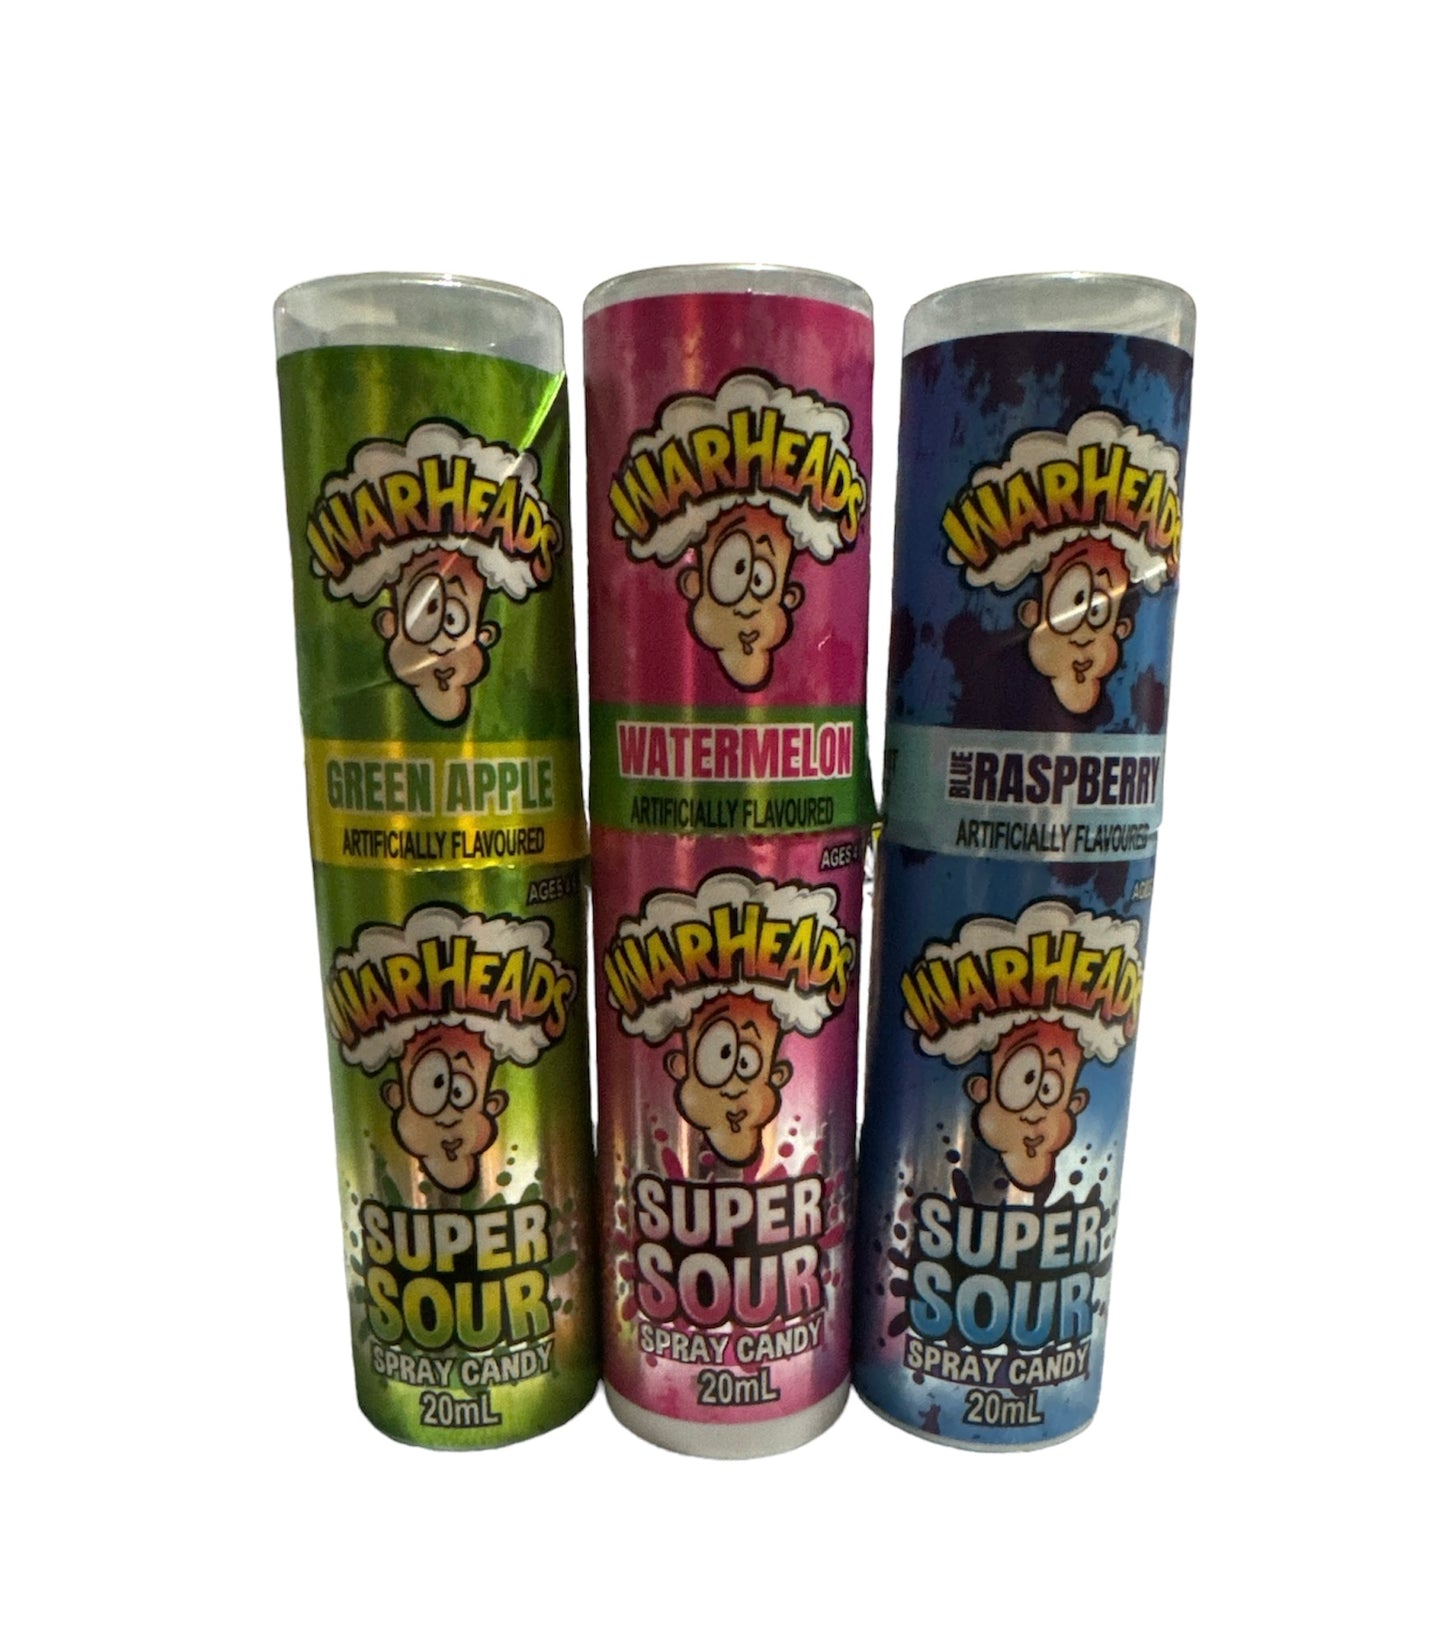 Warhead super Sour Spray